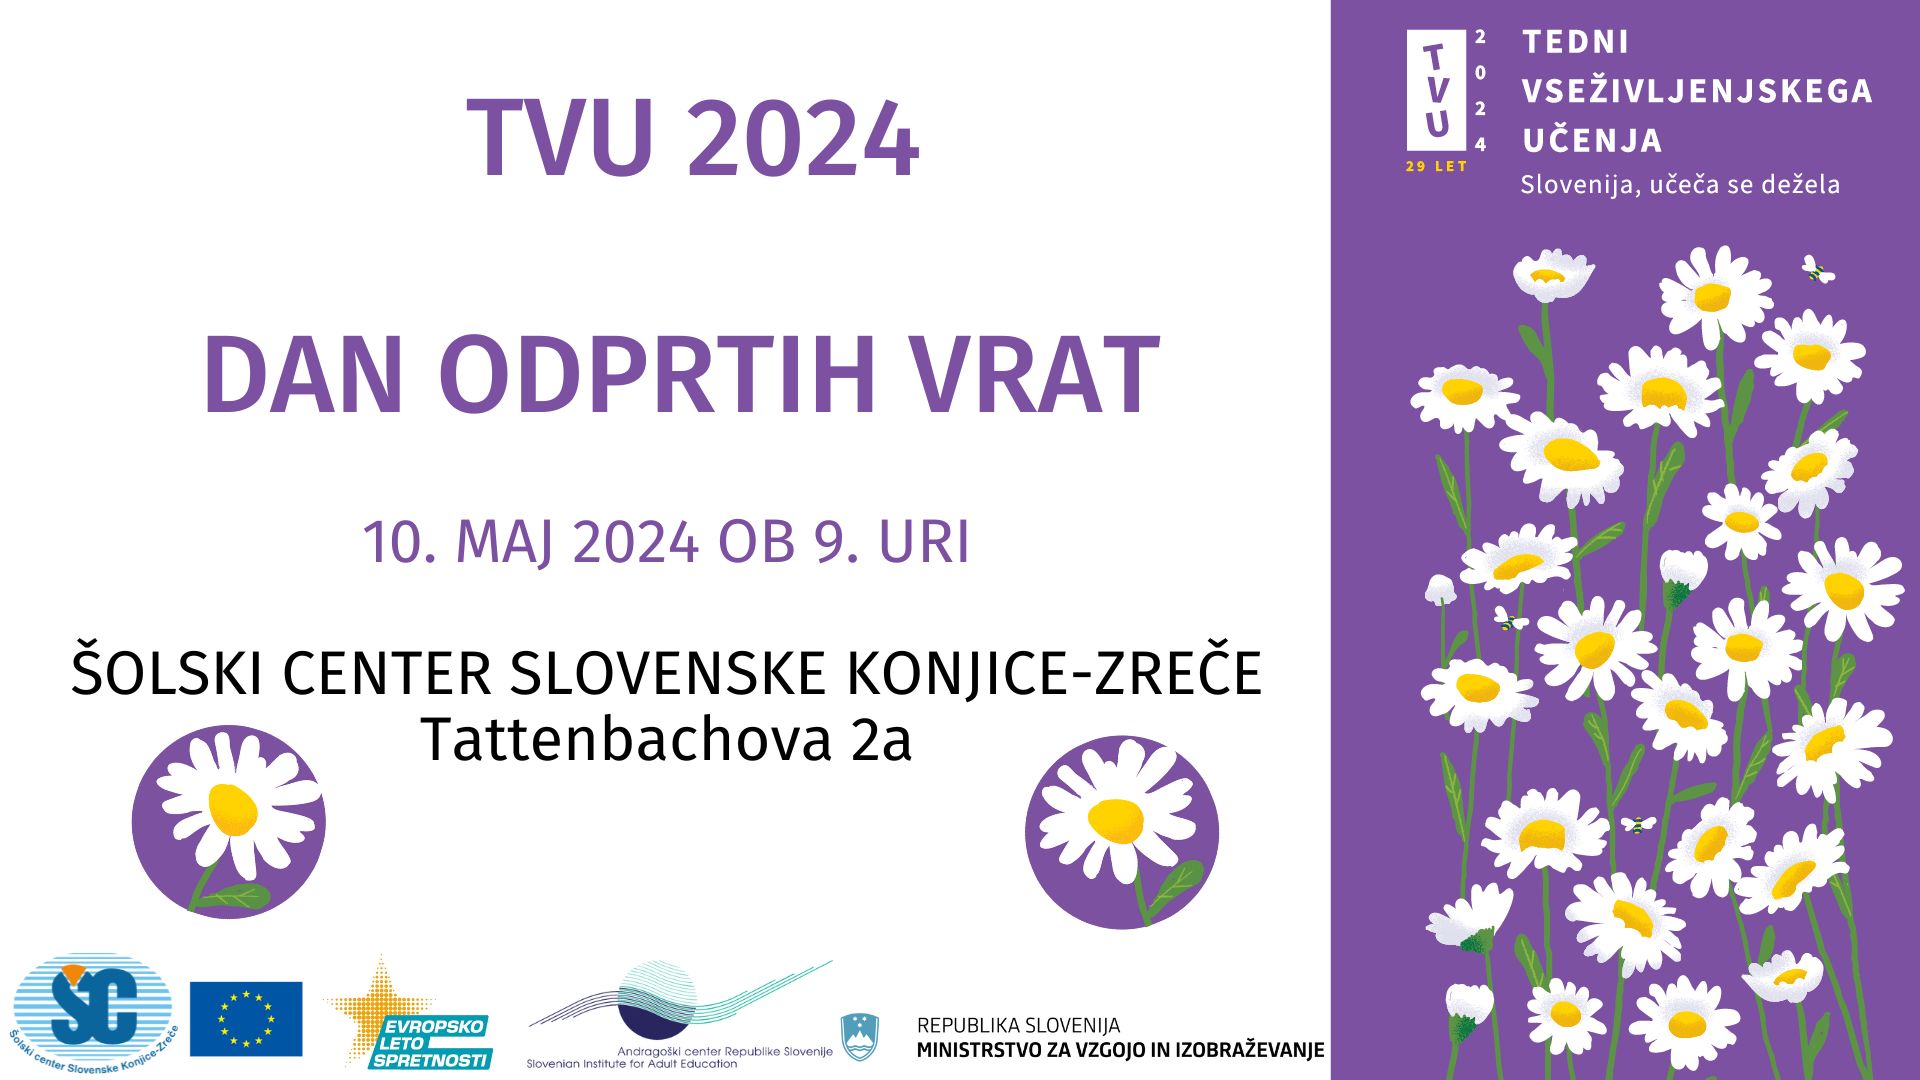 TVU 2024